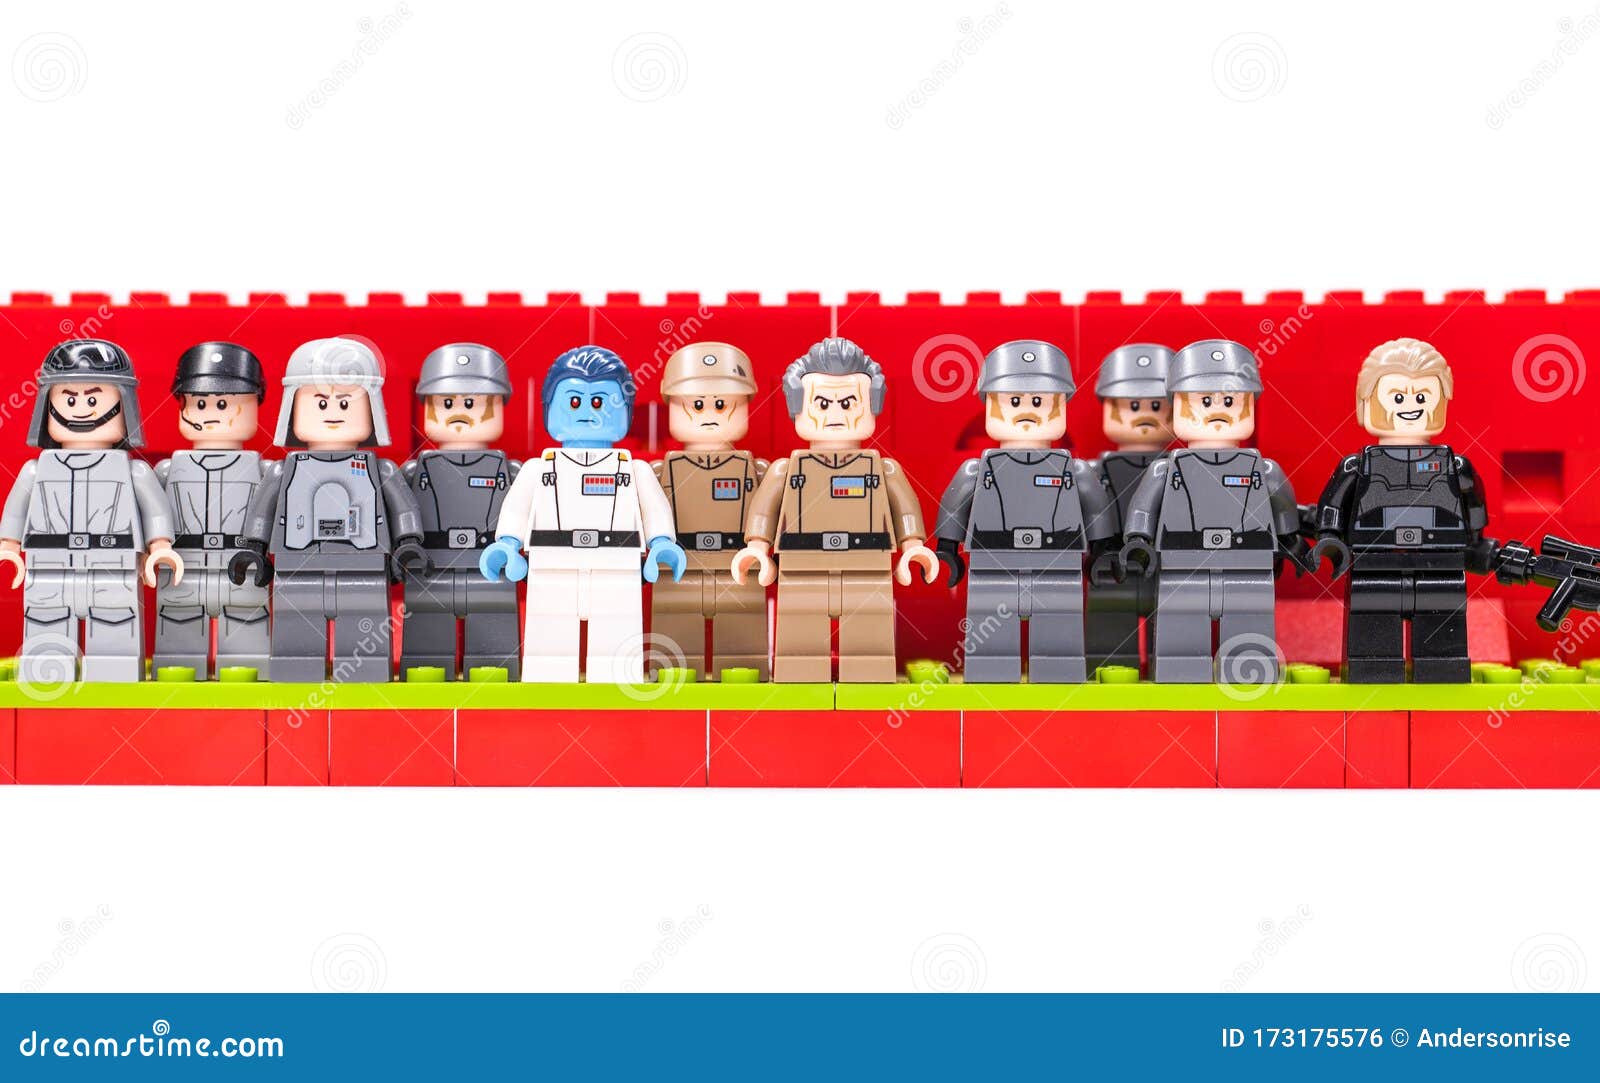 RUSSIA, SAMARA, FEBRUARY 15, 2020 - Lego Star Wars Minifigures